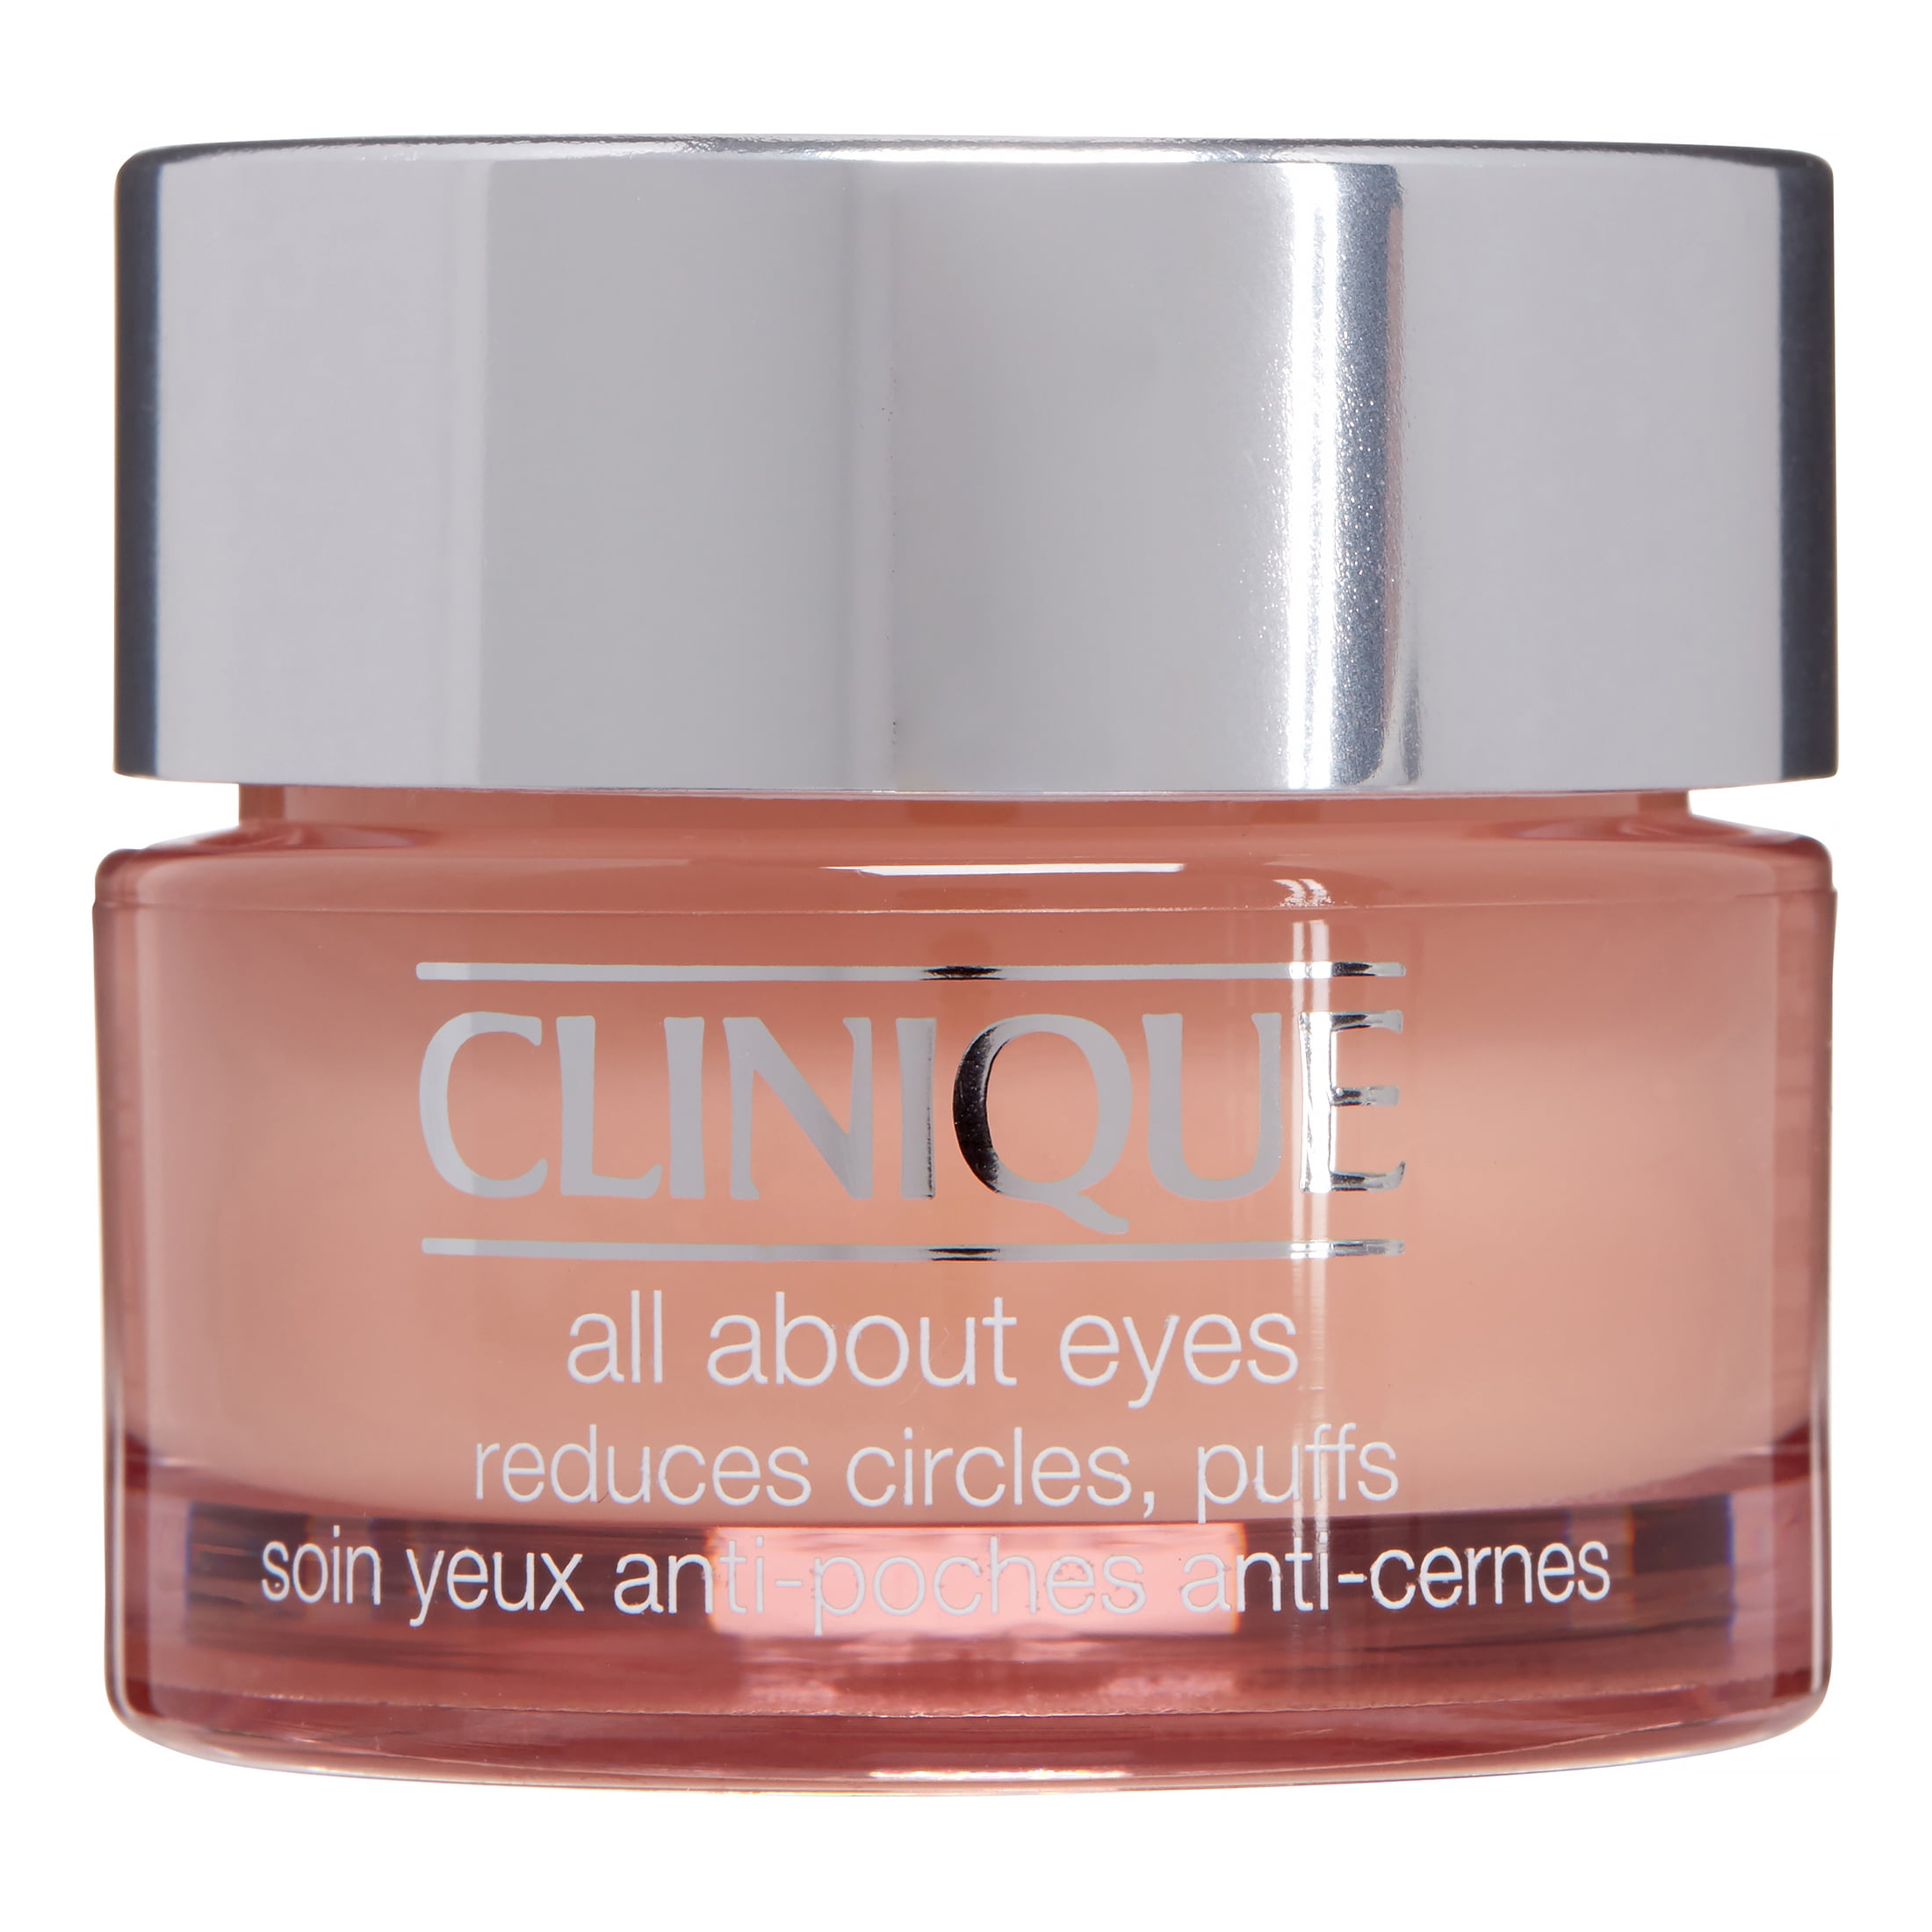 Buy Clinique All About Eyes, Eye Cream, 0.5 oz at Ubuy Trinidad and Tobago